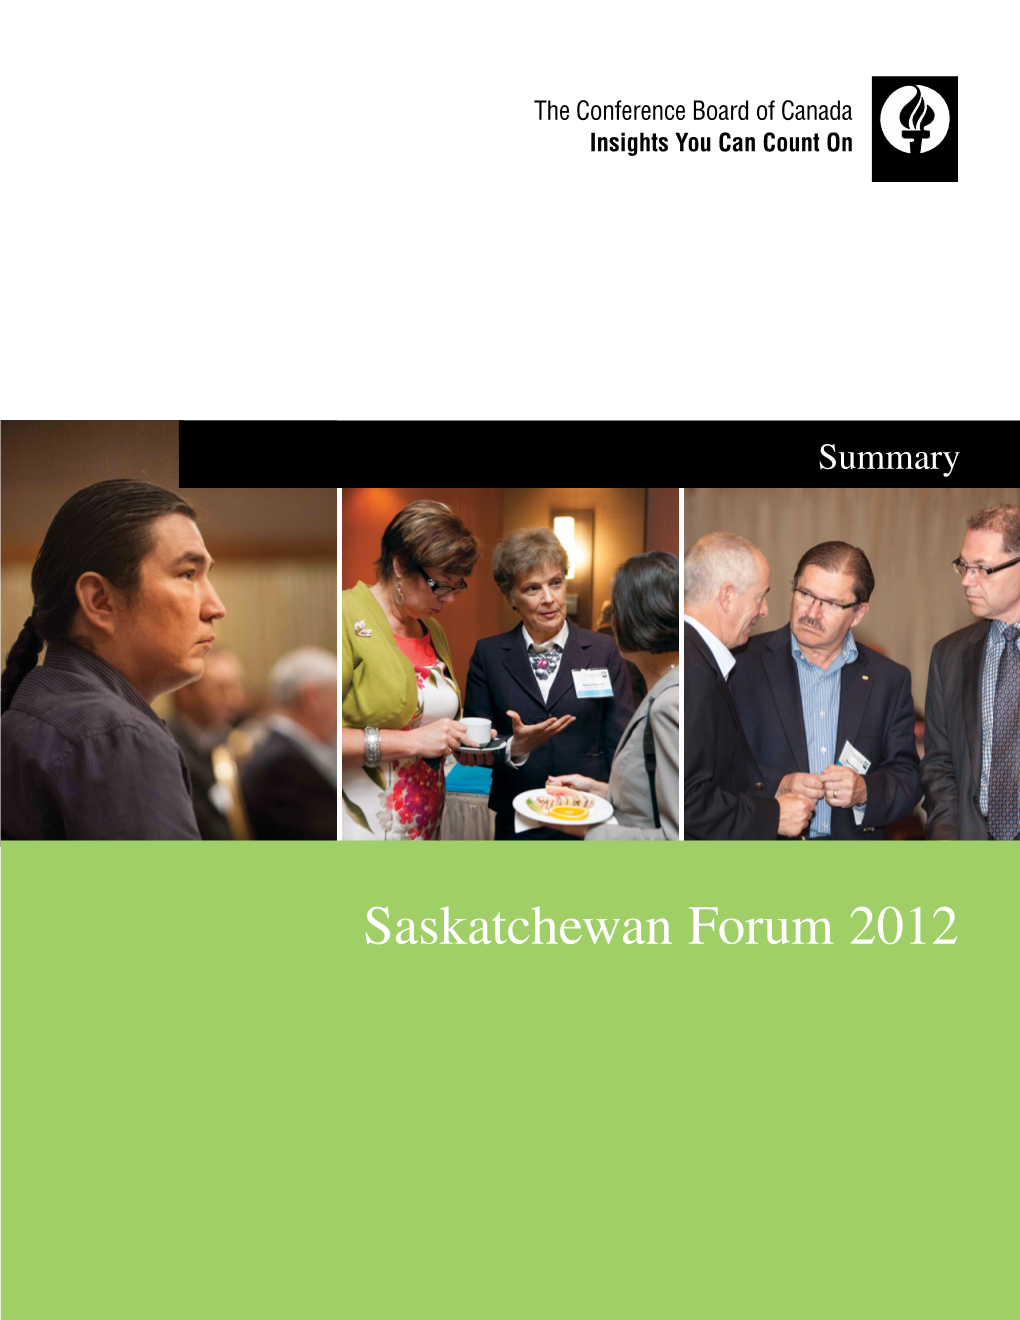 Saskatchewan Forum 2012 Summary Report